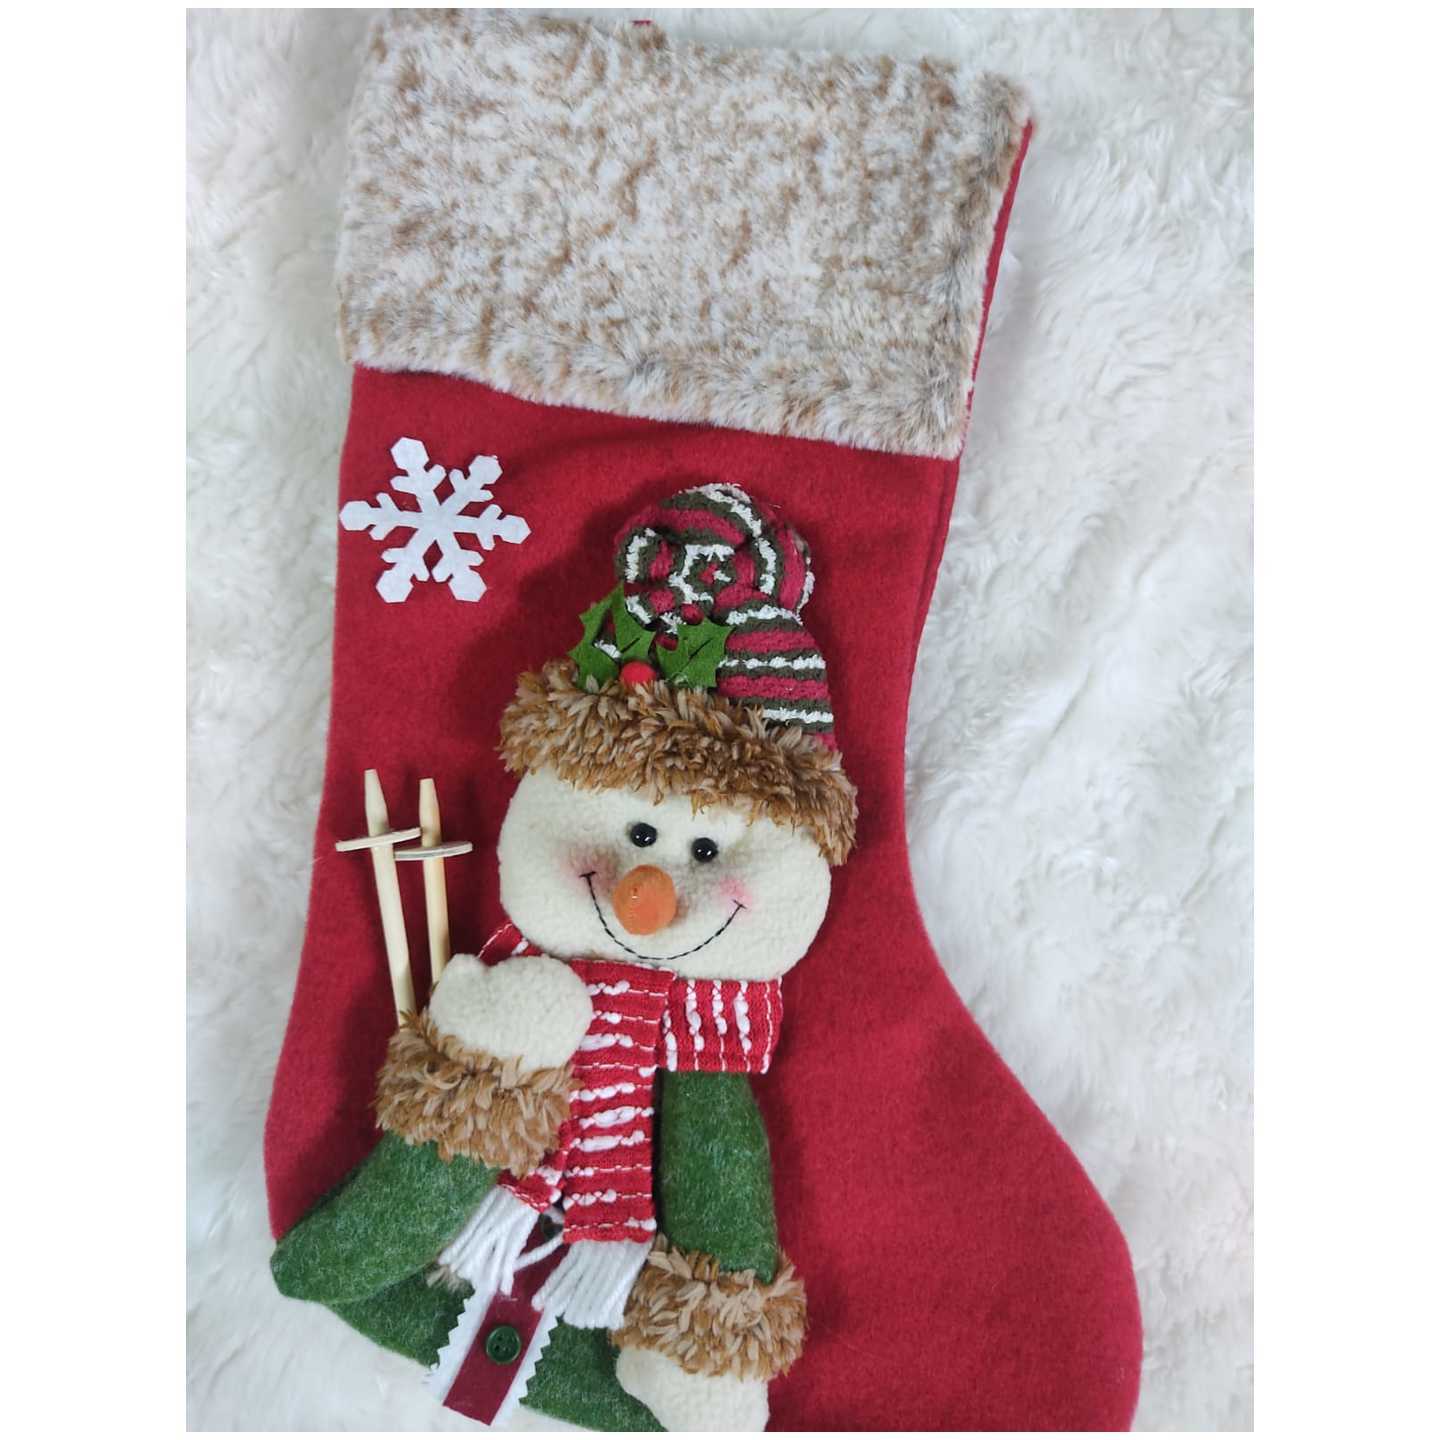 Personalised Stockings - Top Hat Snowman